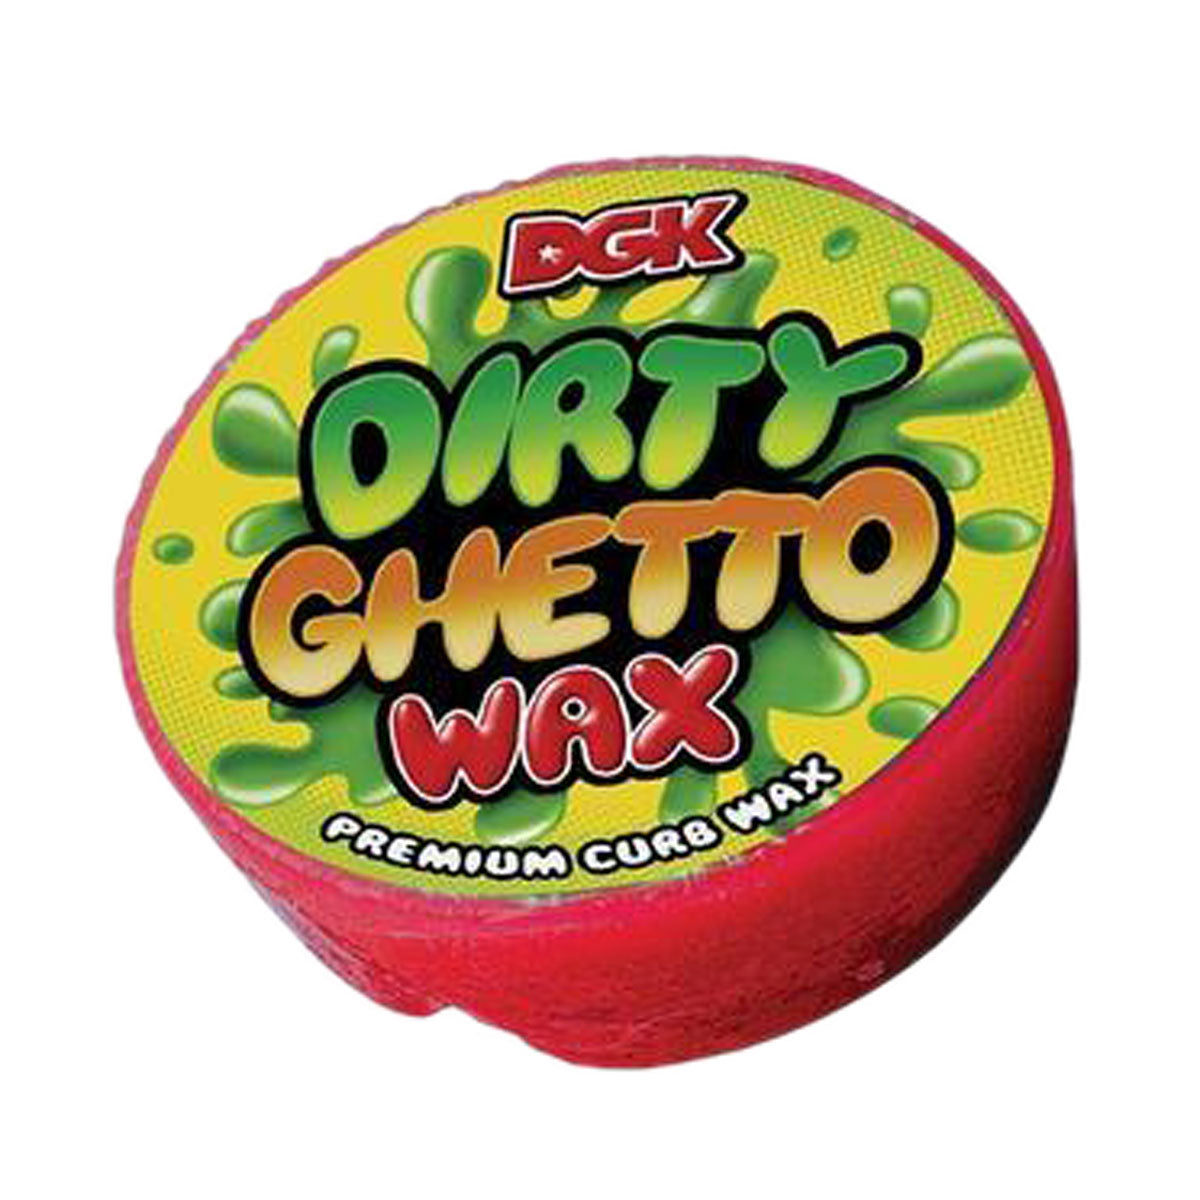 DGK Ghetto Skate Wax - Red image 1